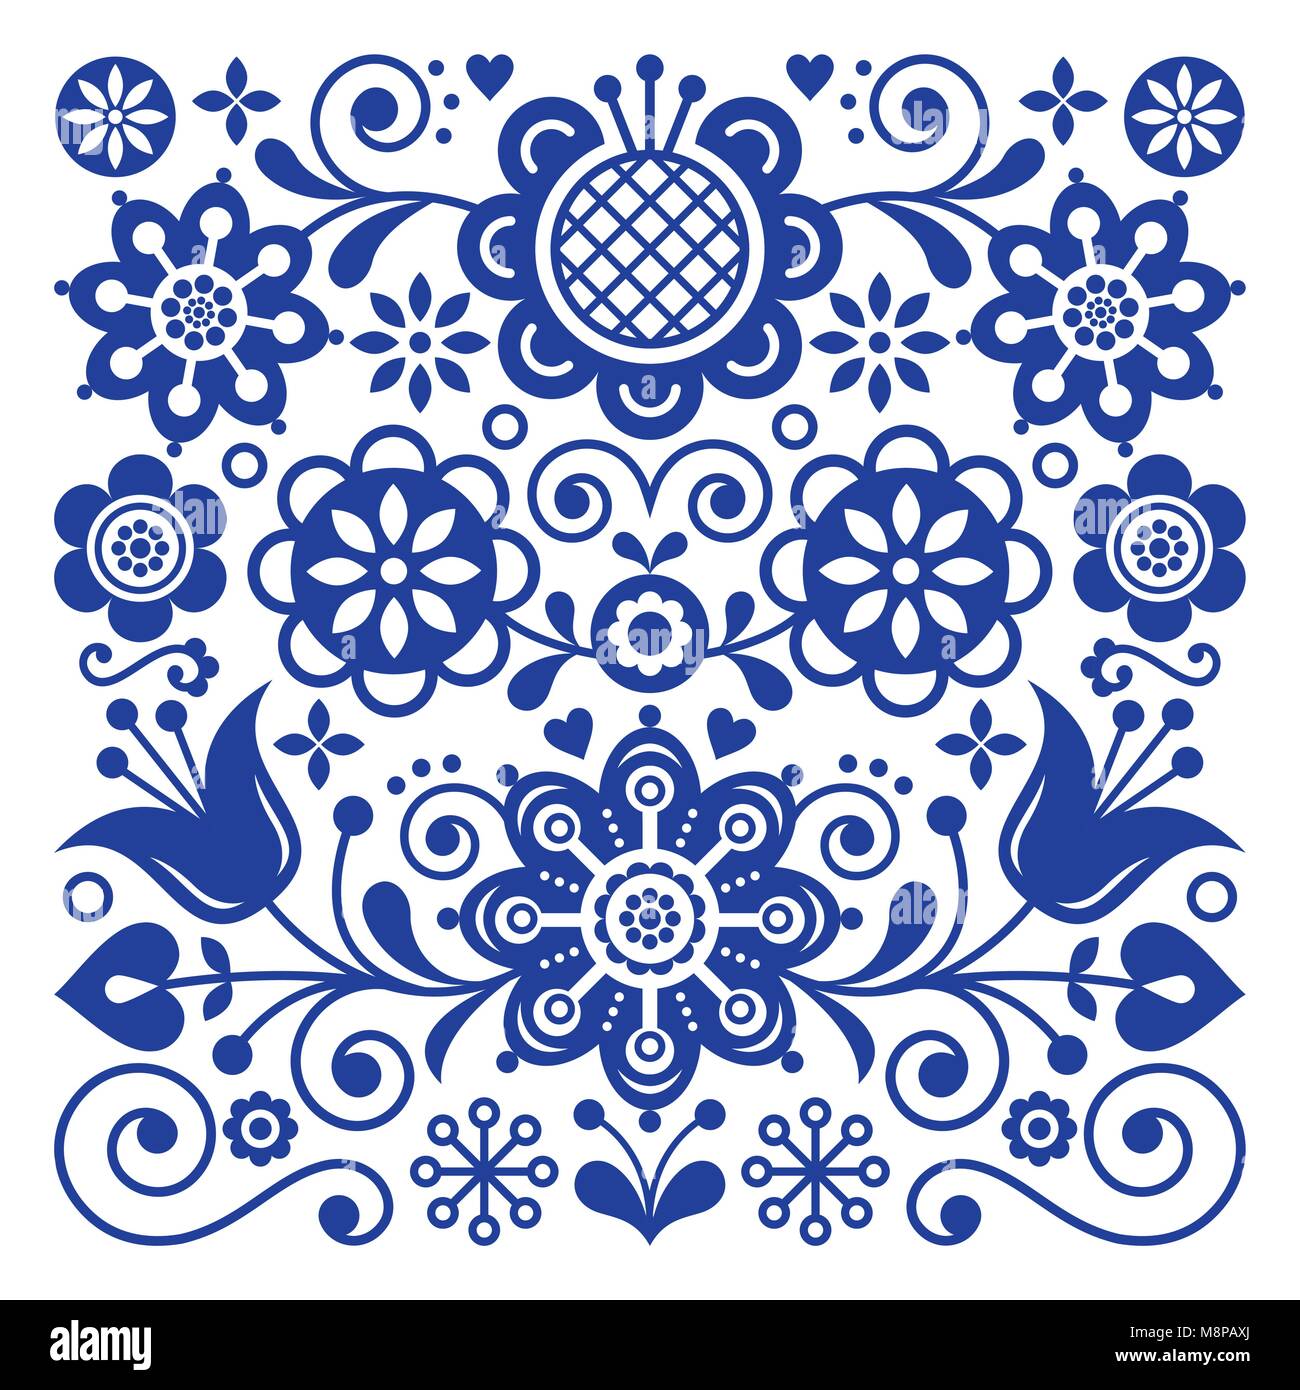 Volkskunst retro Vektor Muster, Skandinavischen floralen ornament Design, nordischen Stil ethnische Dekoration Stock Vektor